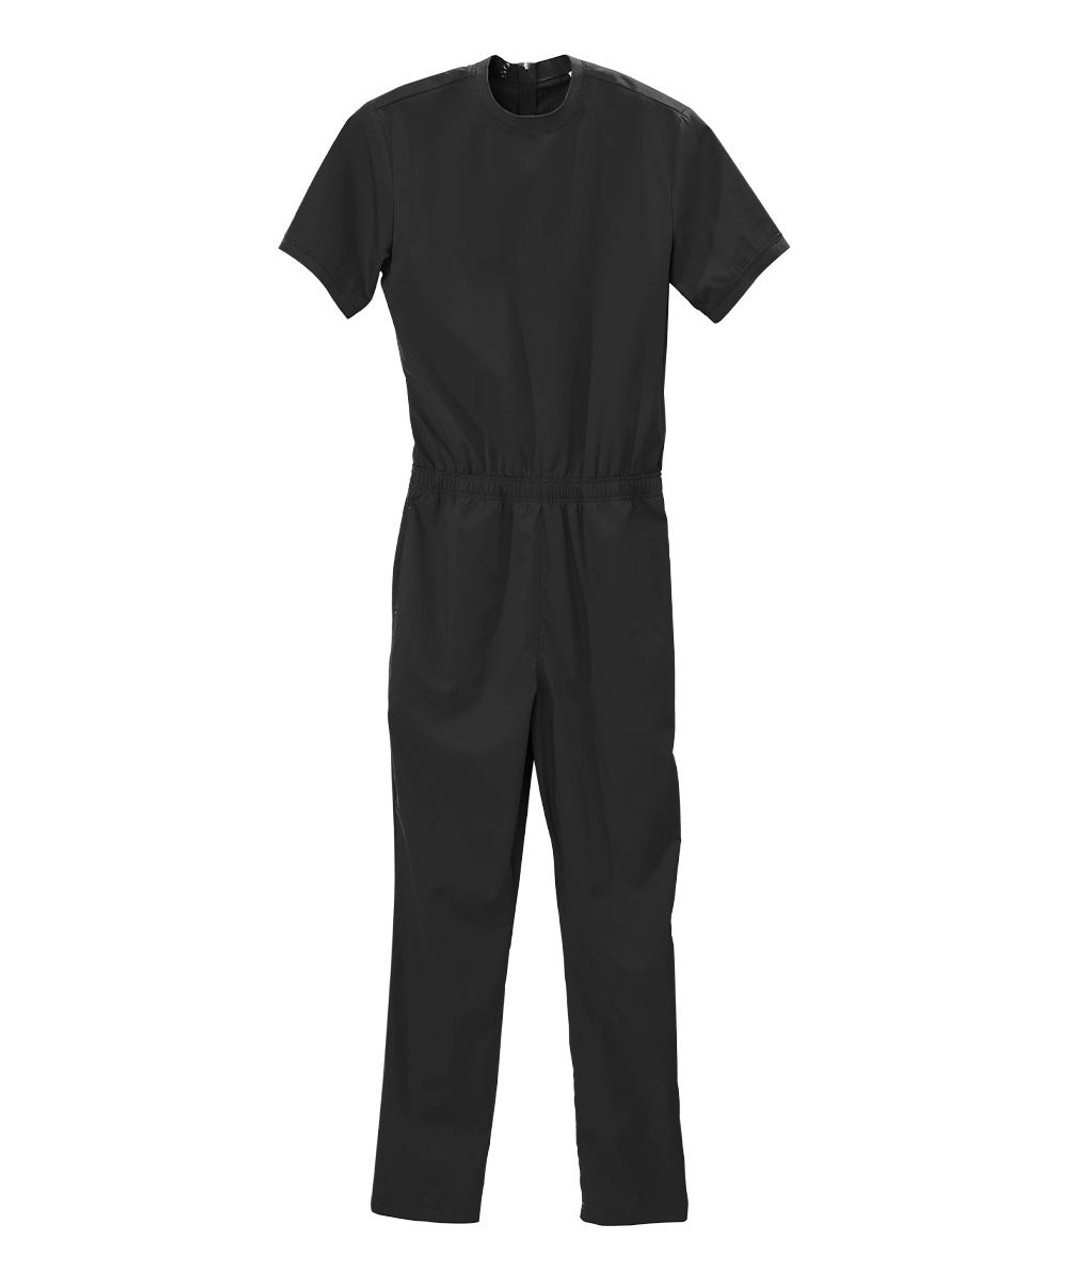 Silverts SV50830 Men's Dementia Alzheimer's Anti Strip Jumpsuit Black, Size=M, SV50830-BLK-M